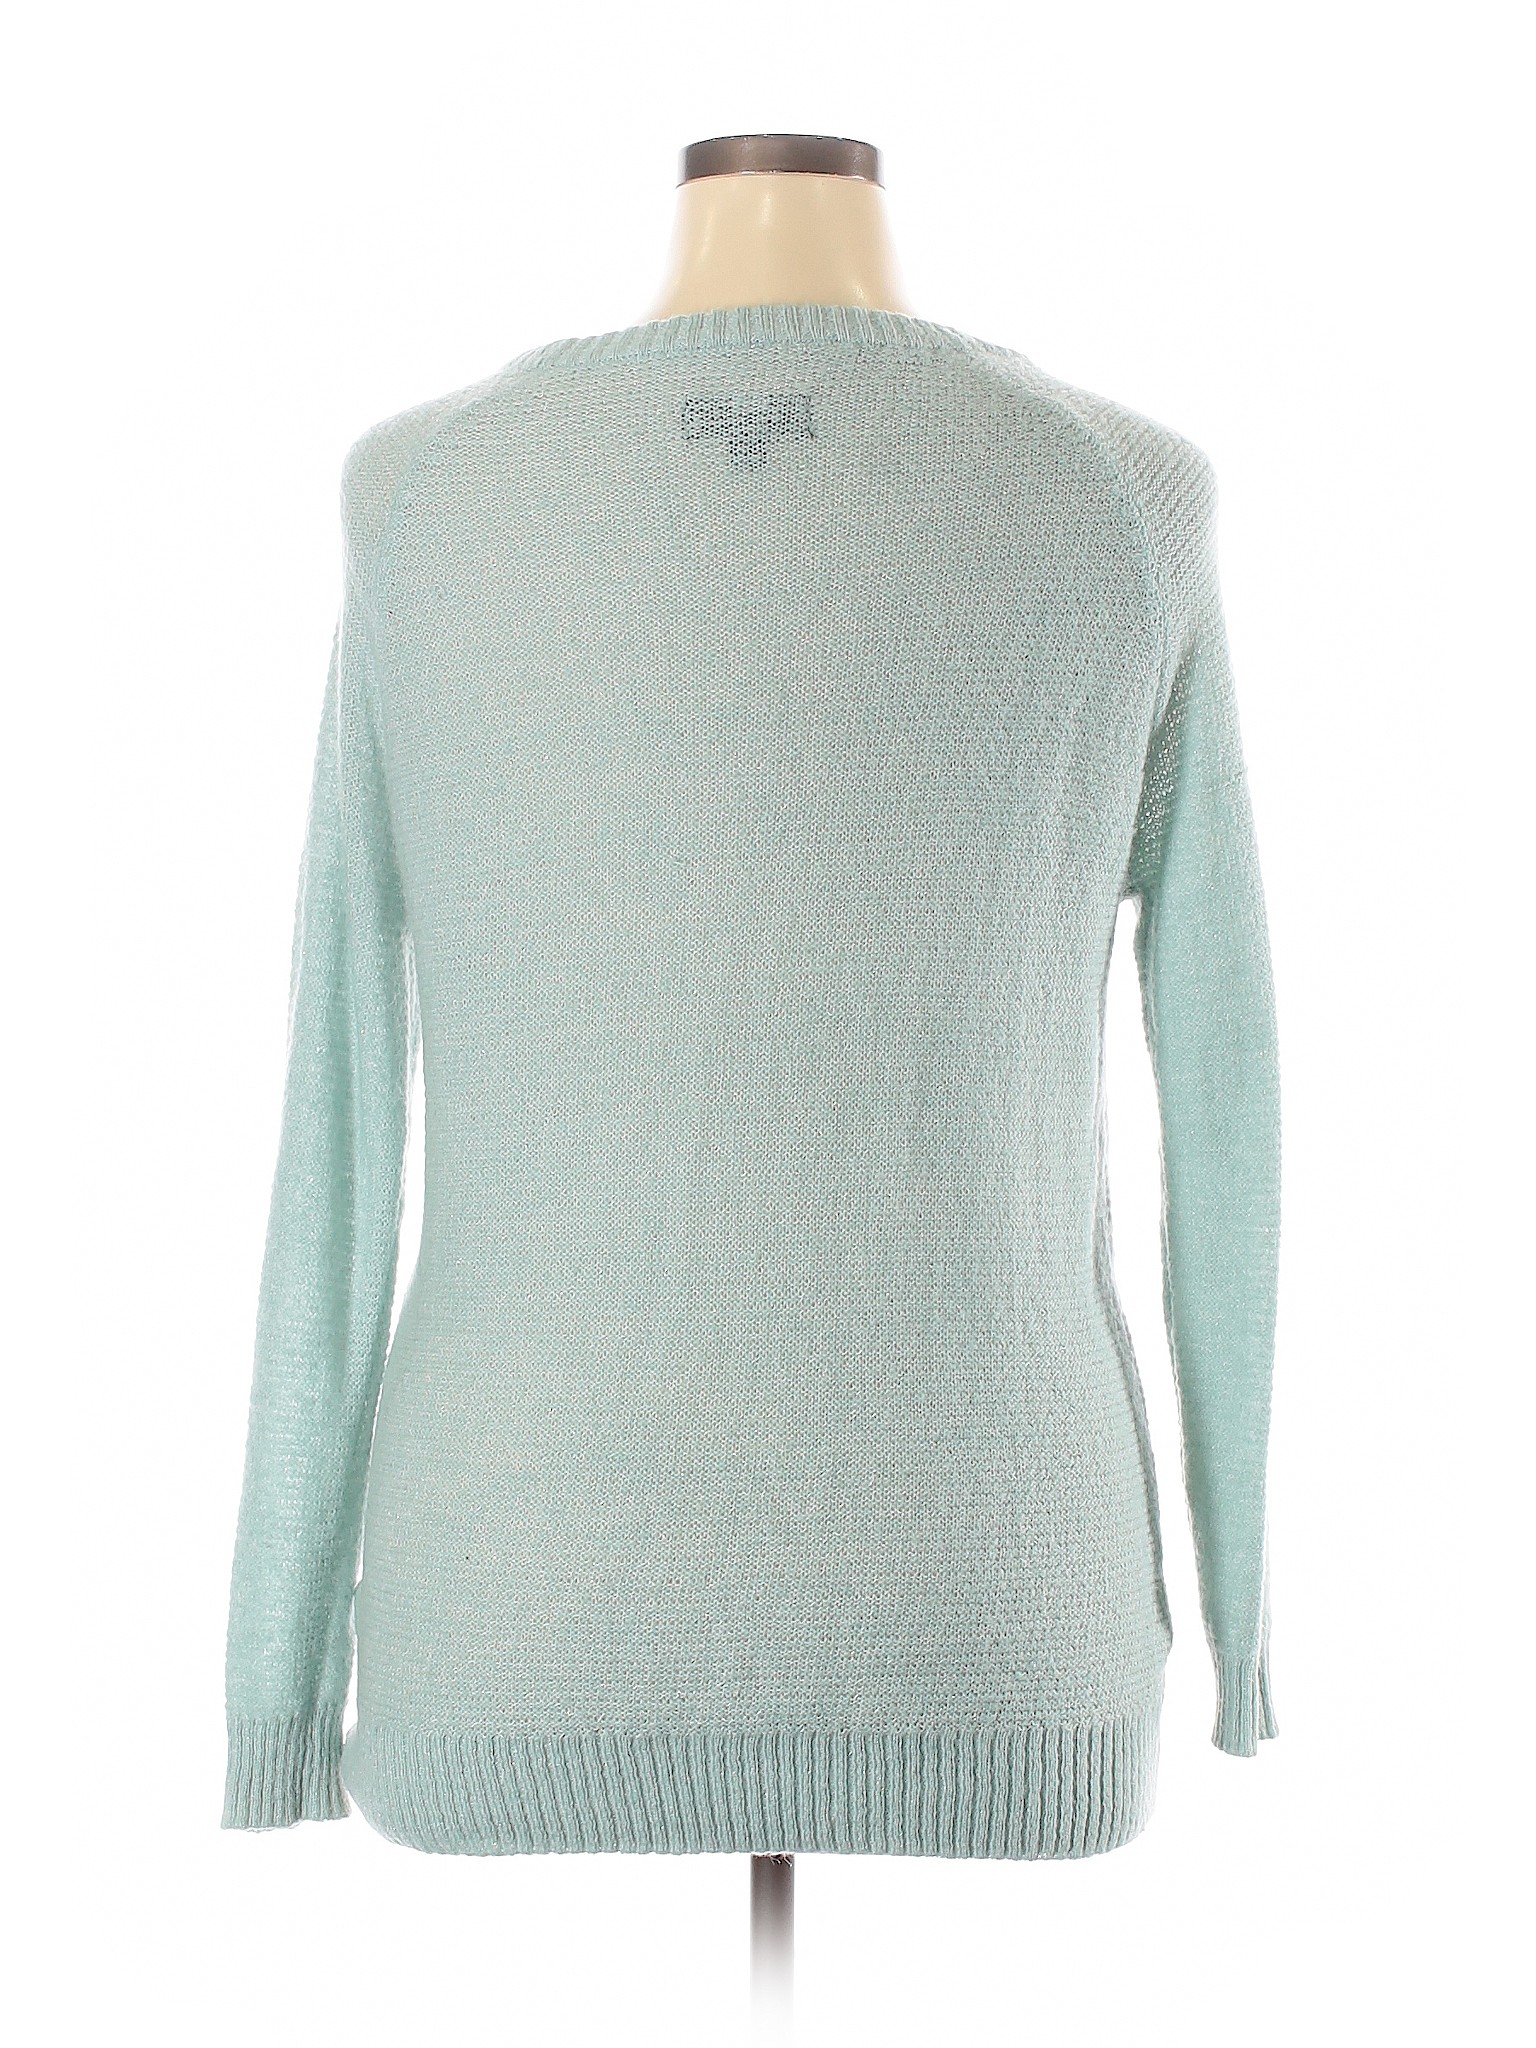 Mossimo Women Green Pullover Sweater XL | eBay